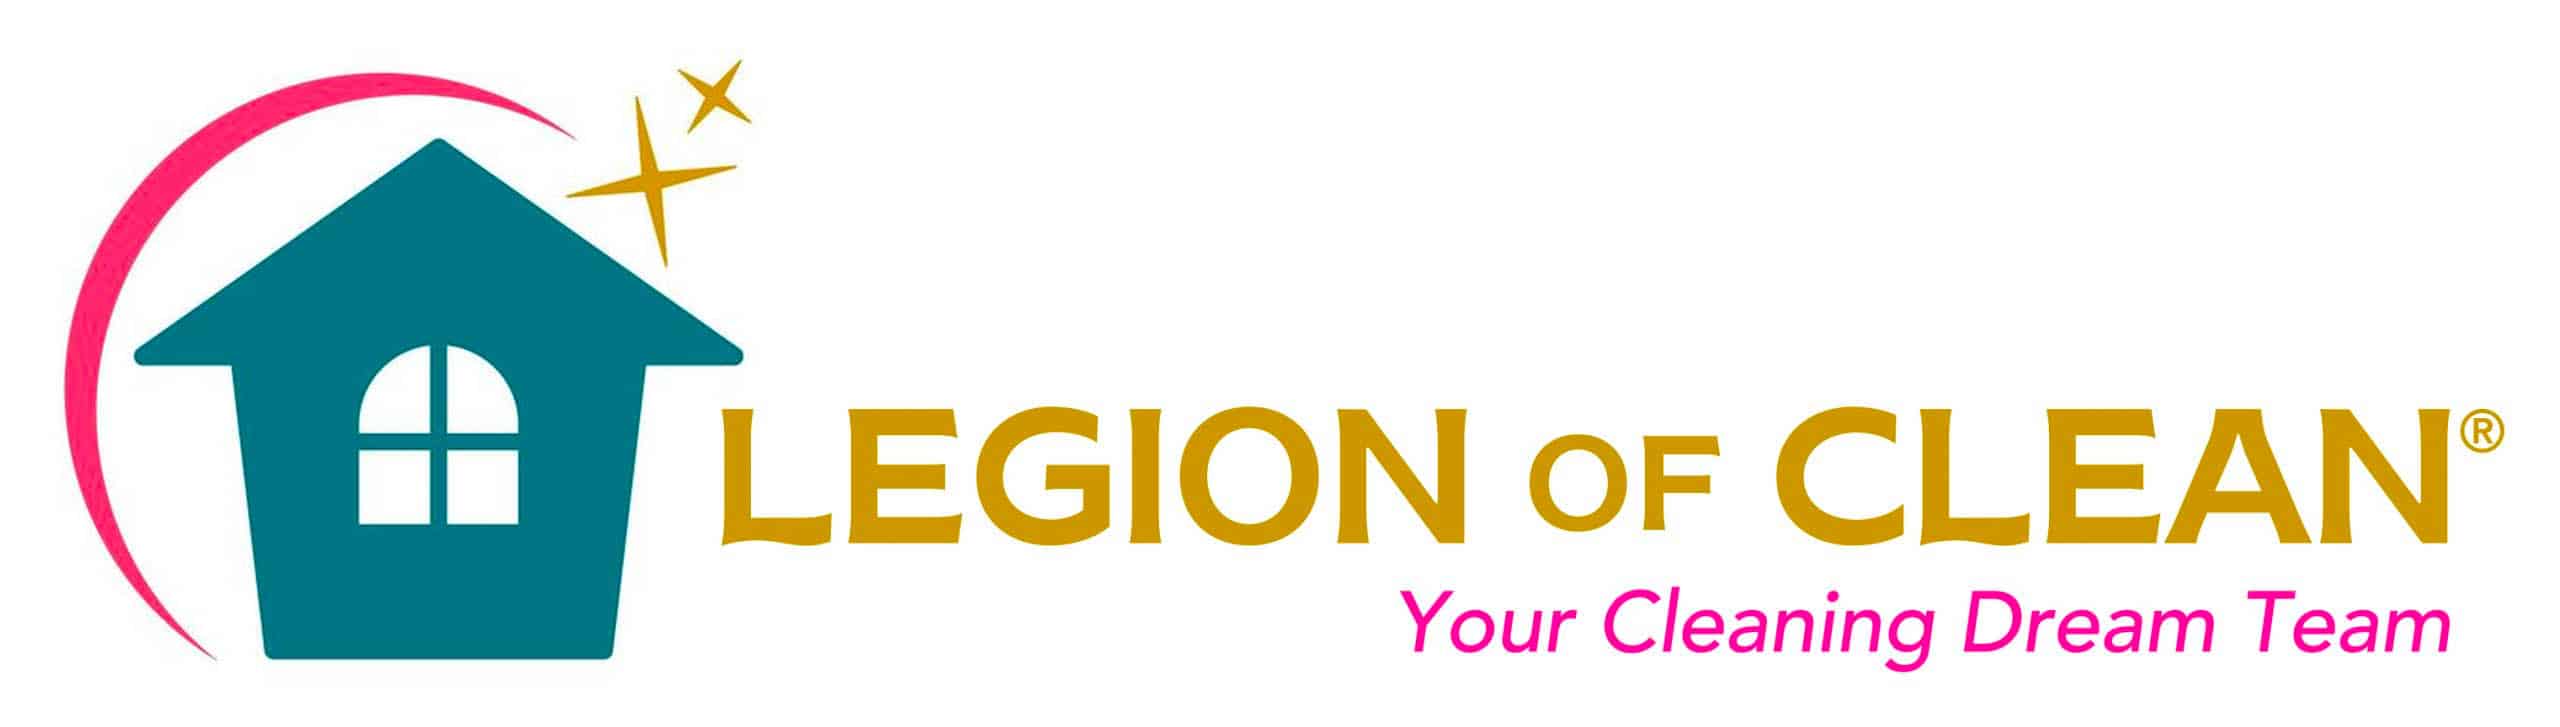 Legion of Clean Website Logo